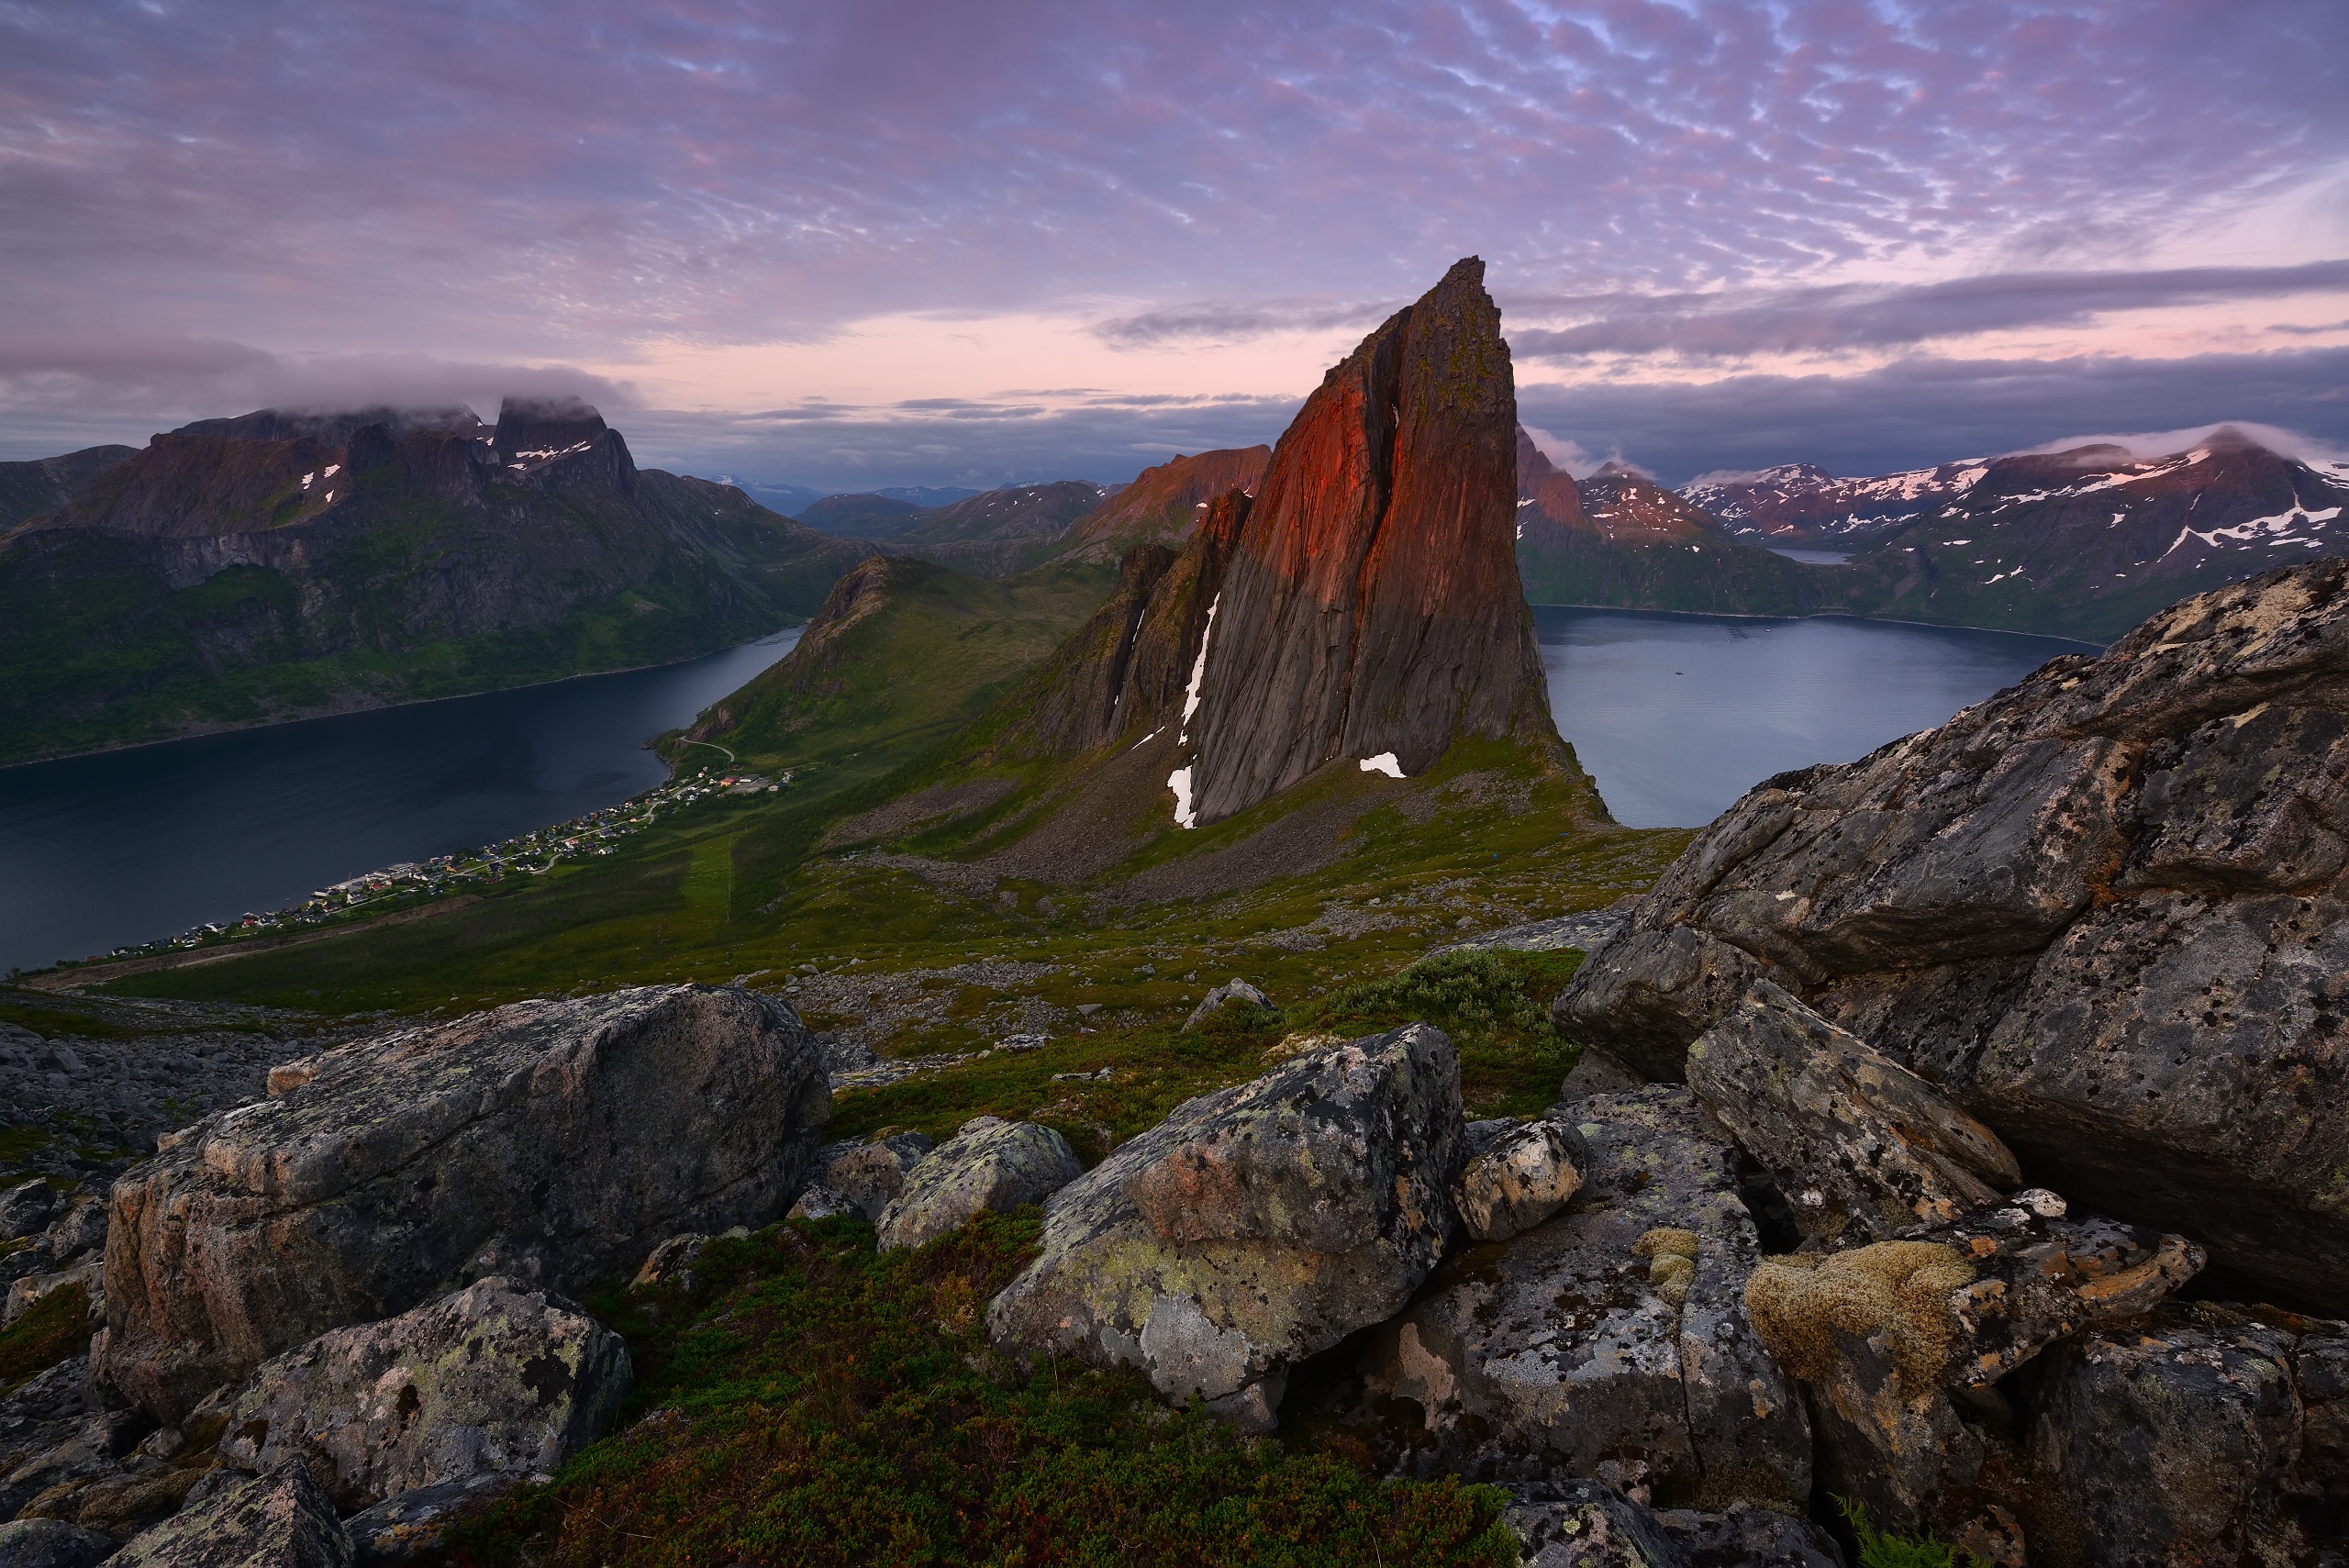 General 2560x1709 Norway landscape nature rocks stones